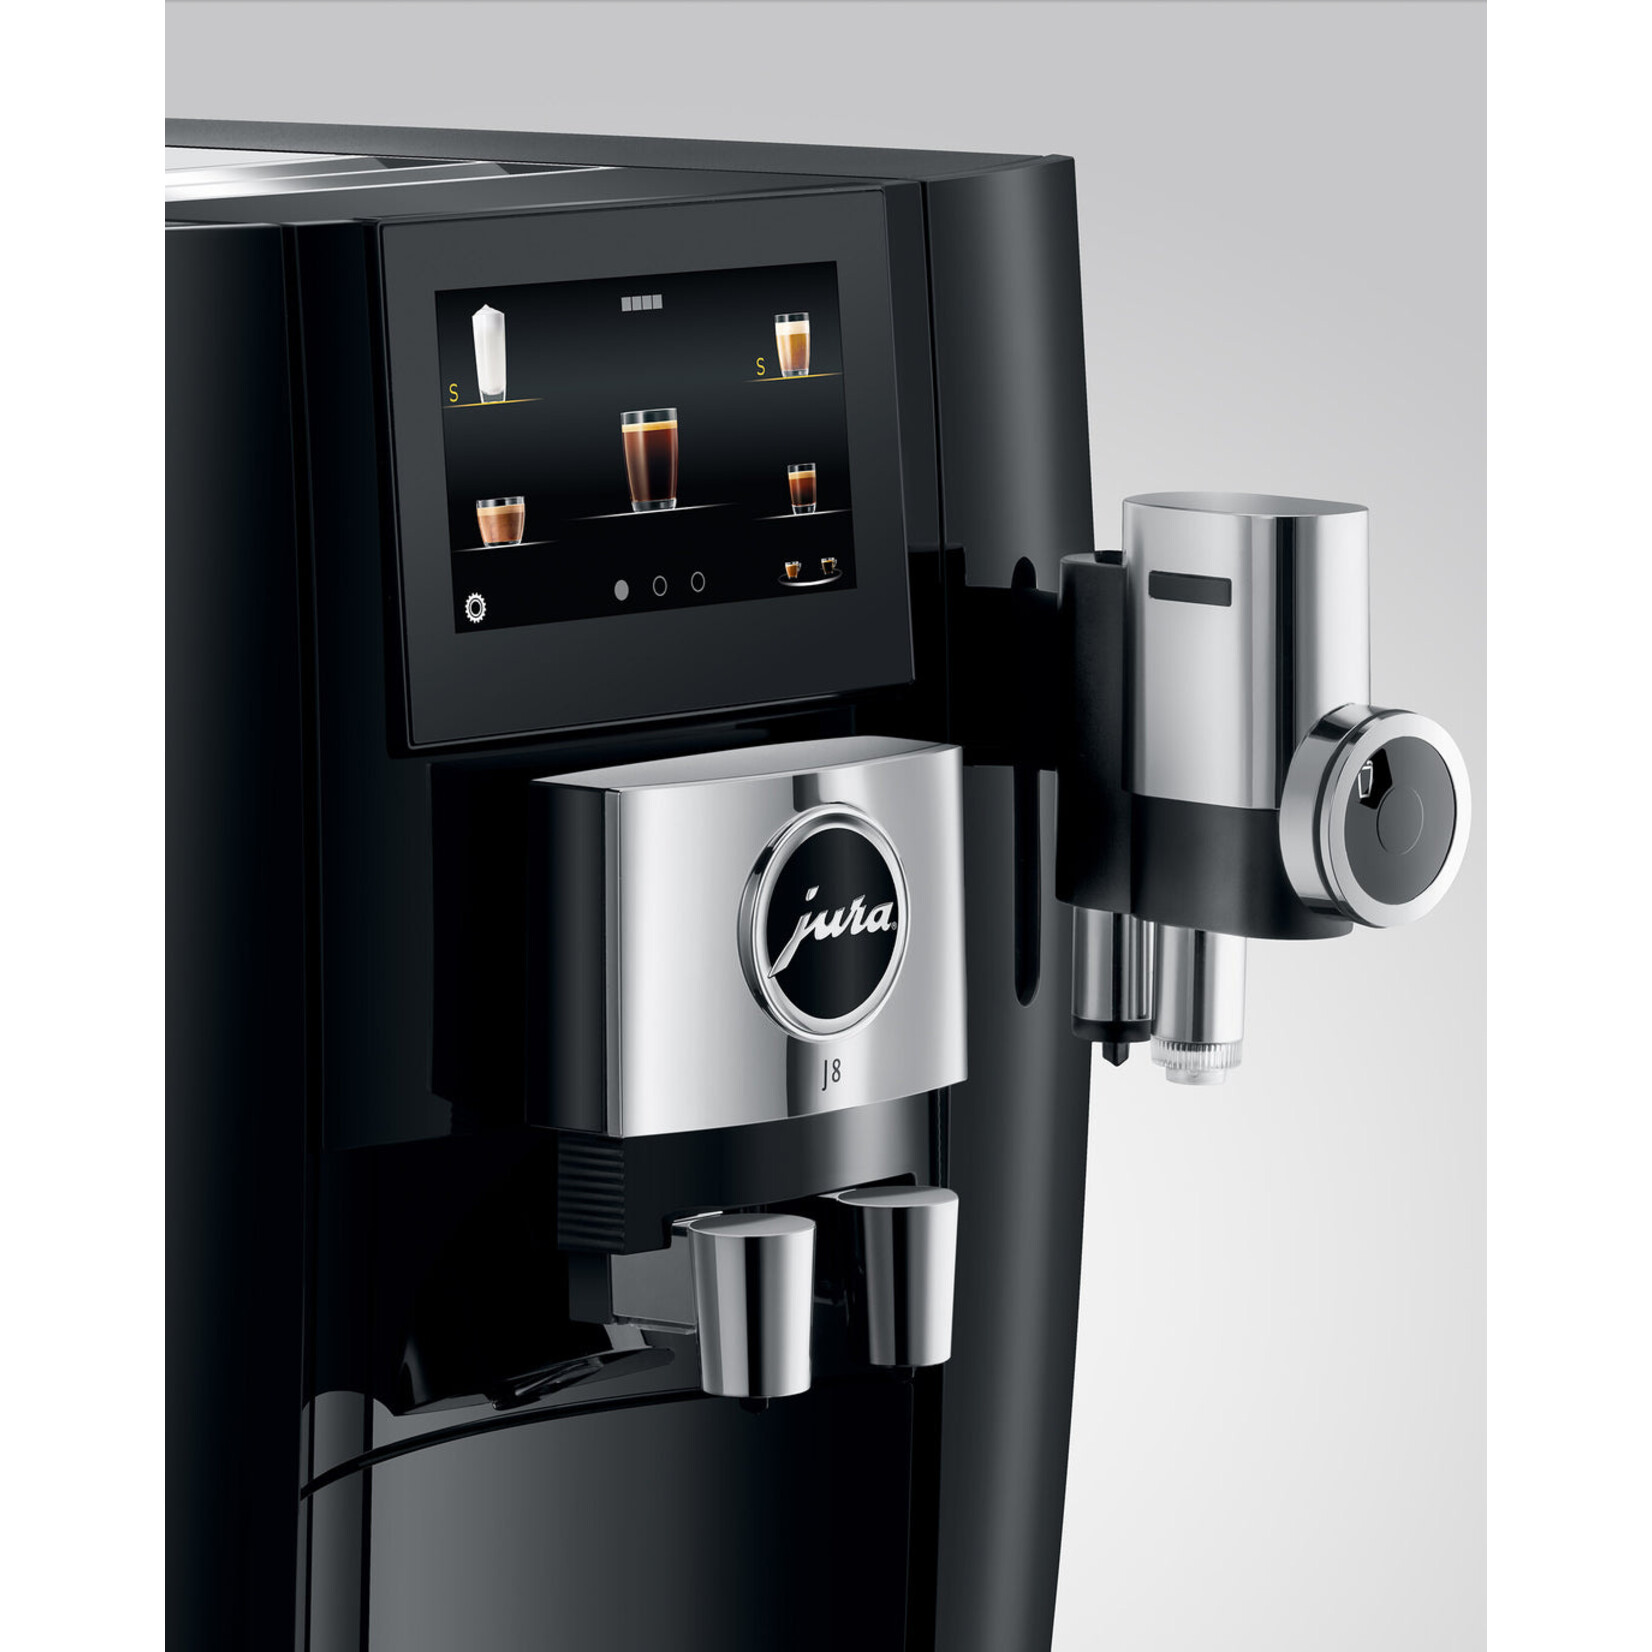 JURA Espresso automatique J8 piano black (Commande Spéciale)